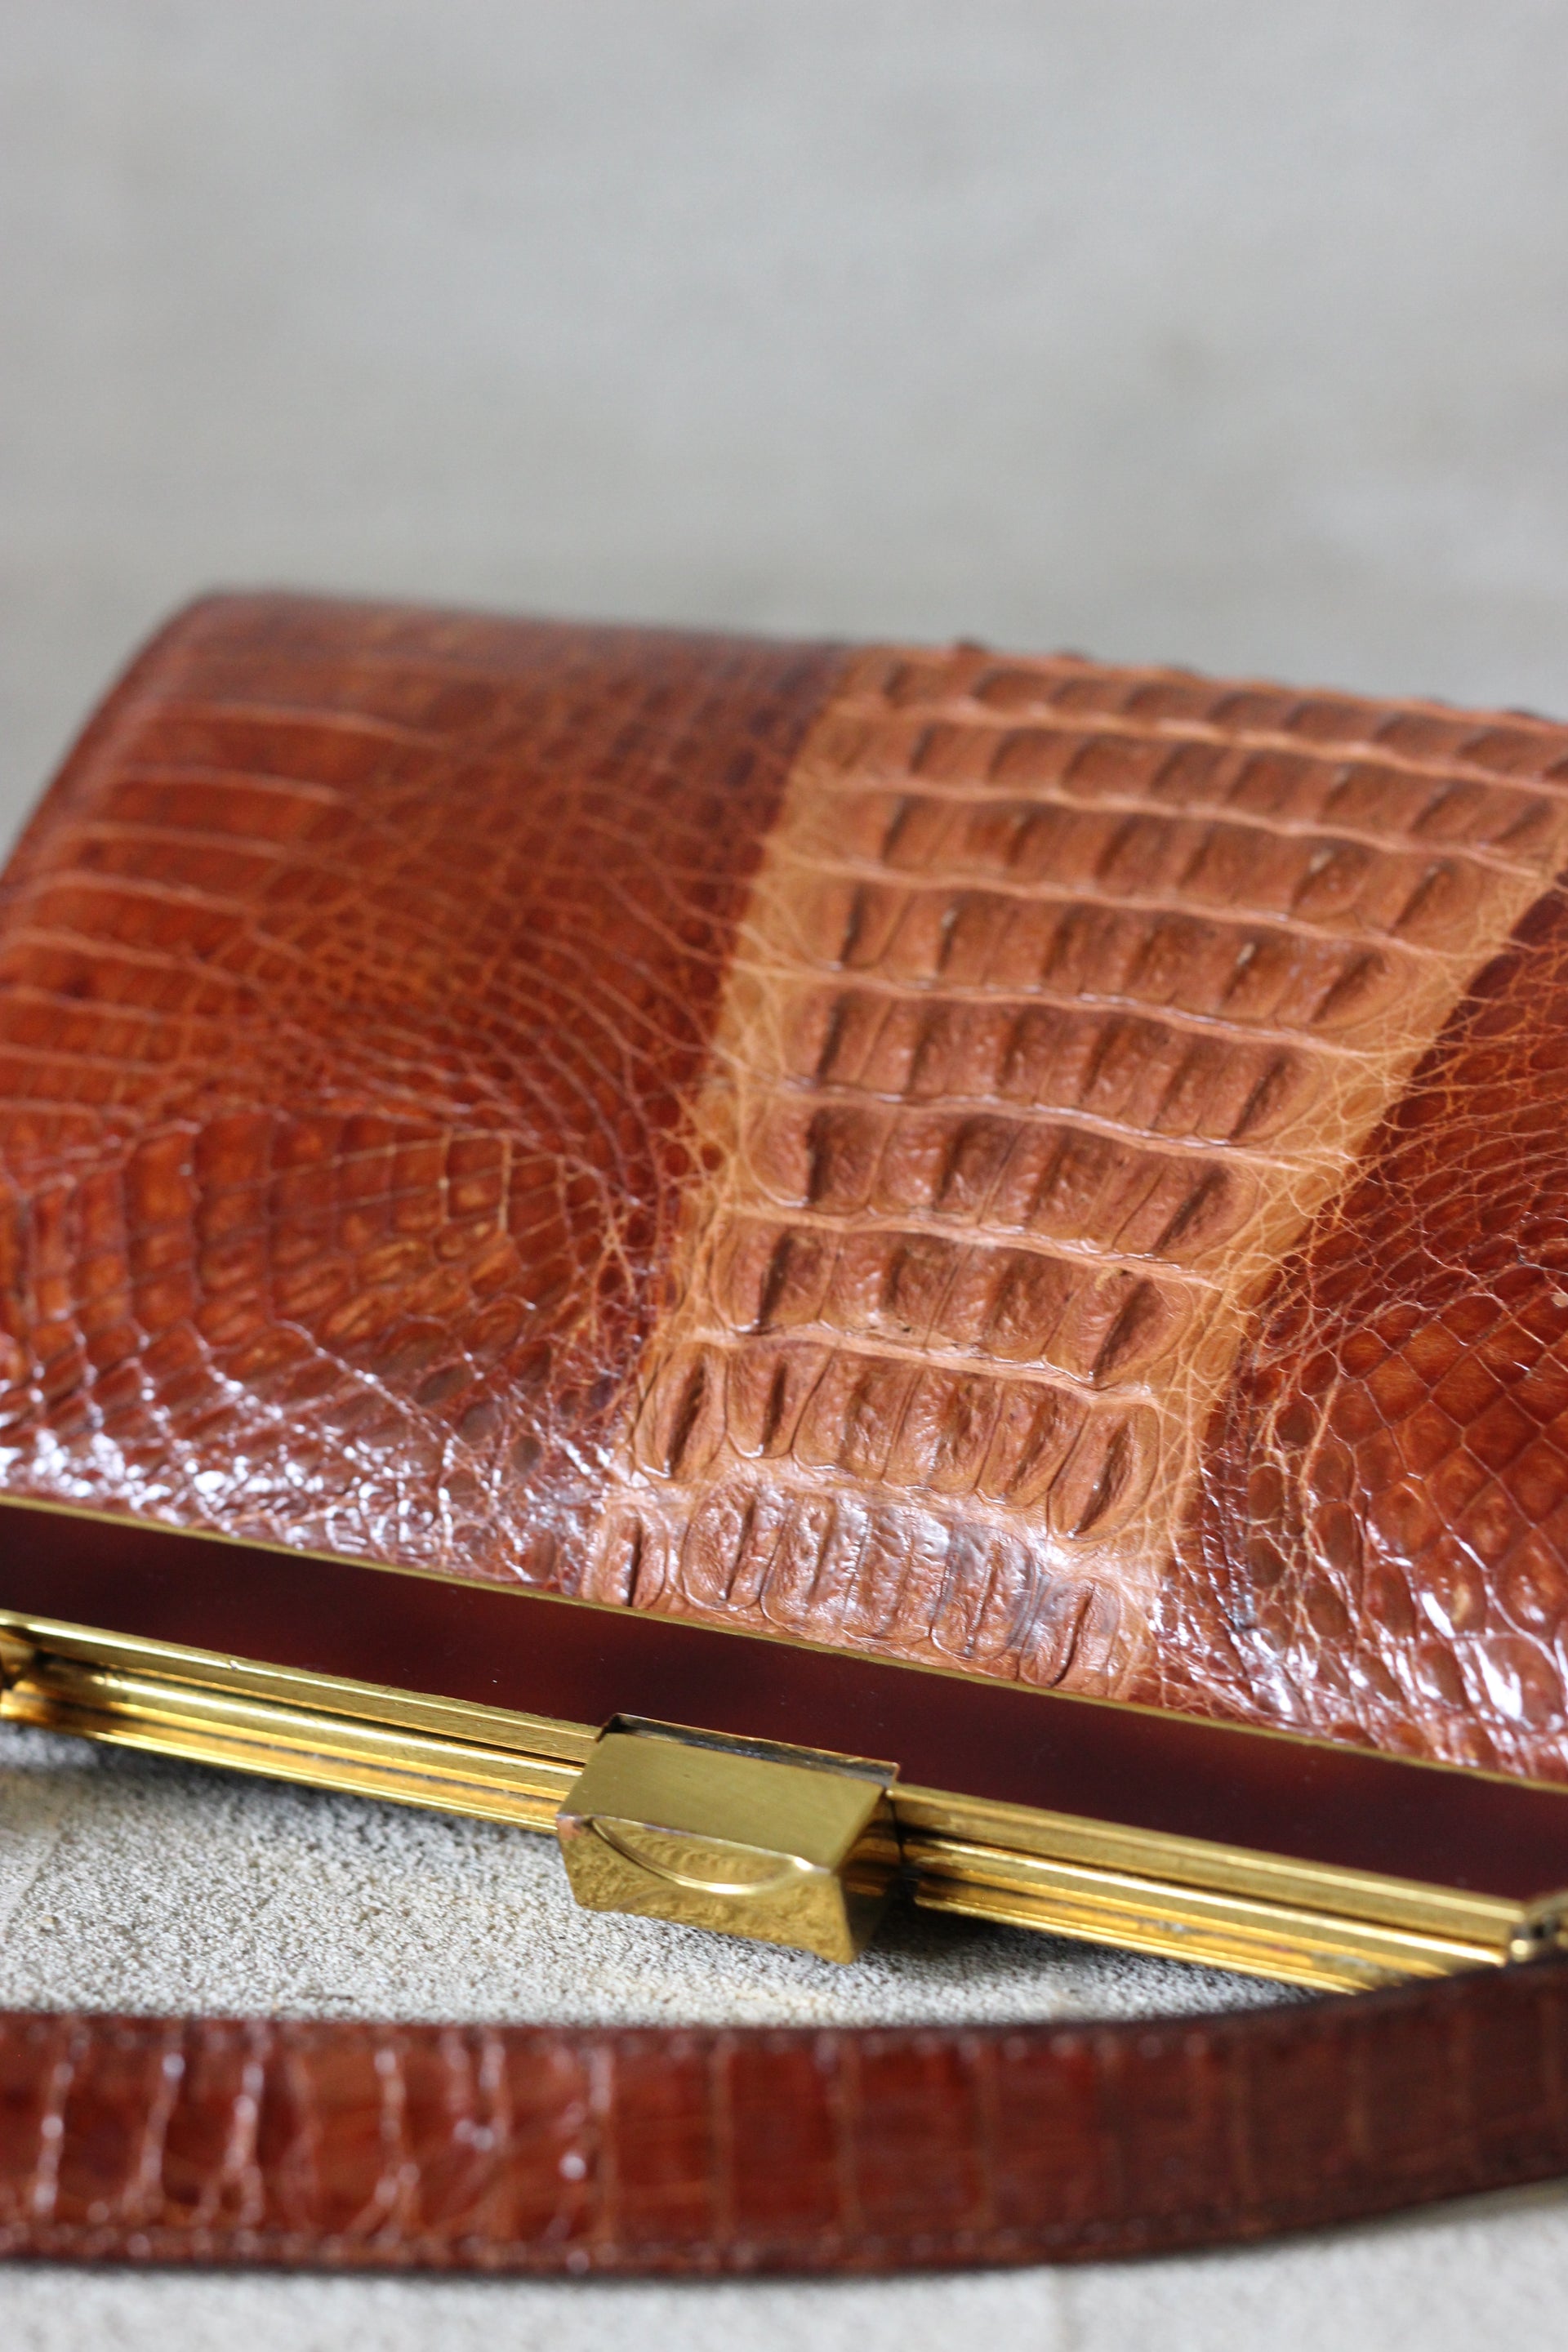 1940s Tan Brown Leather Framed Handbag//Genuine Crocodile/Alligator